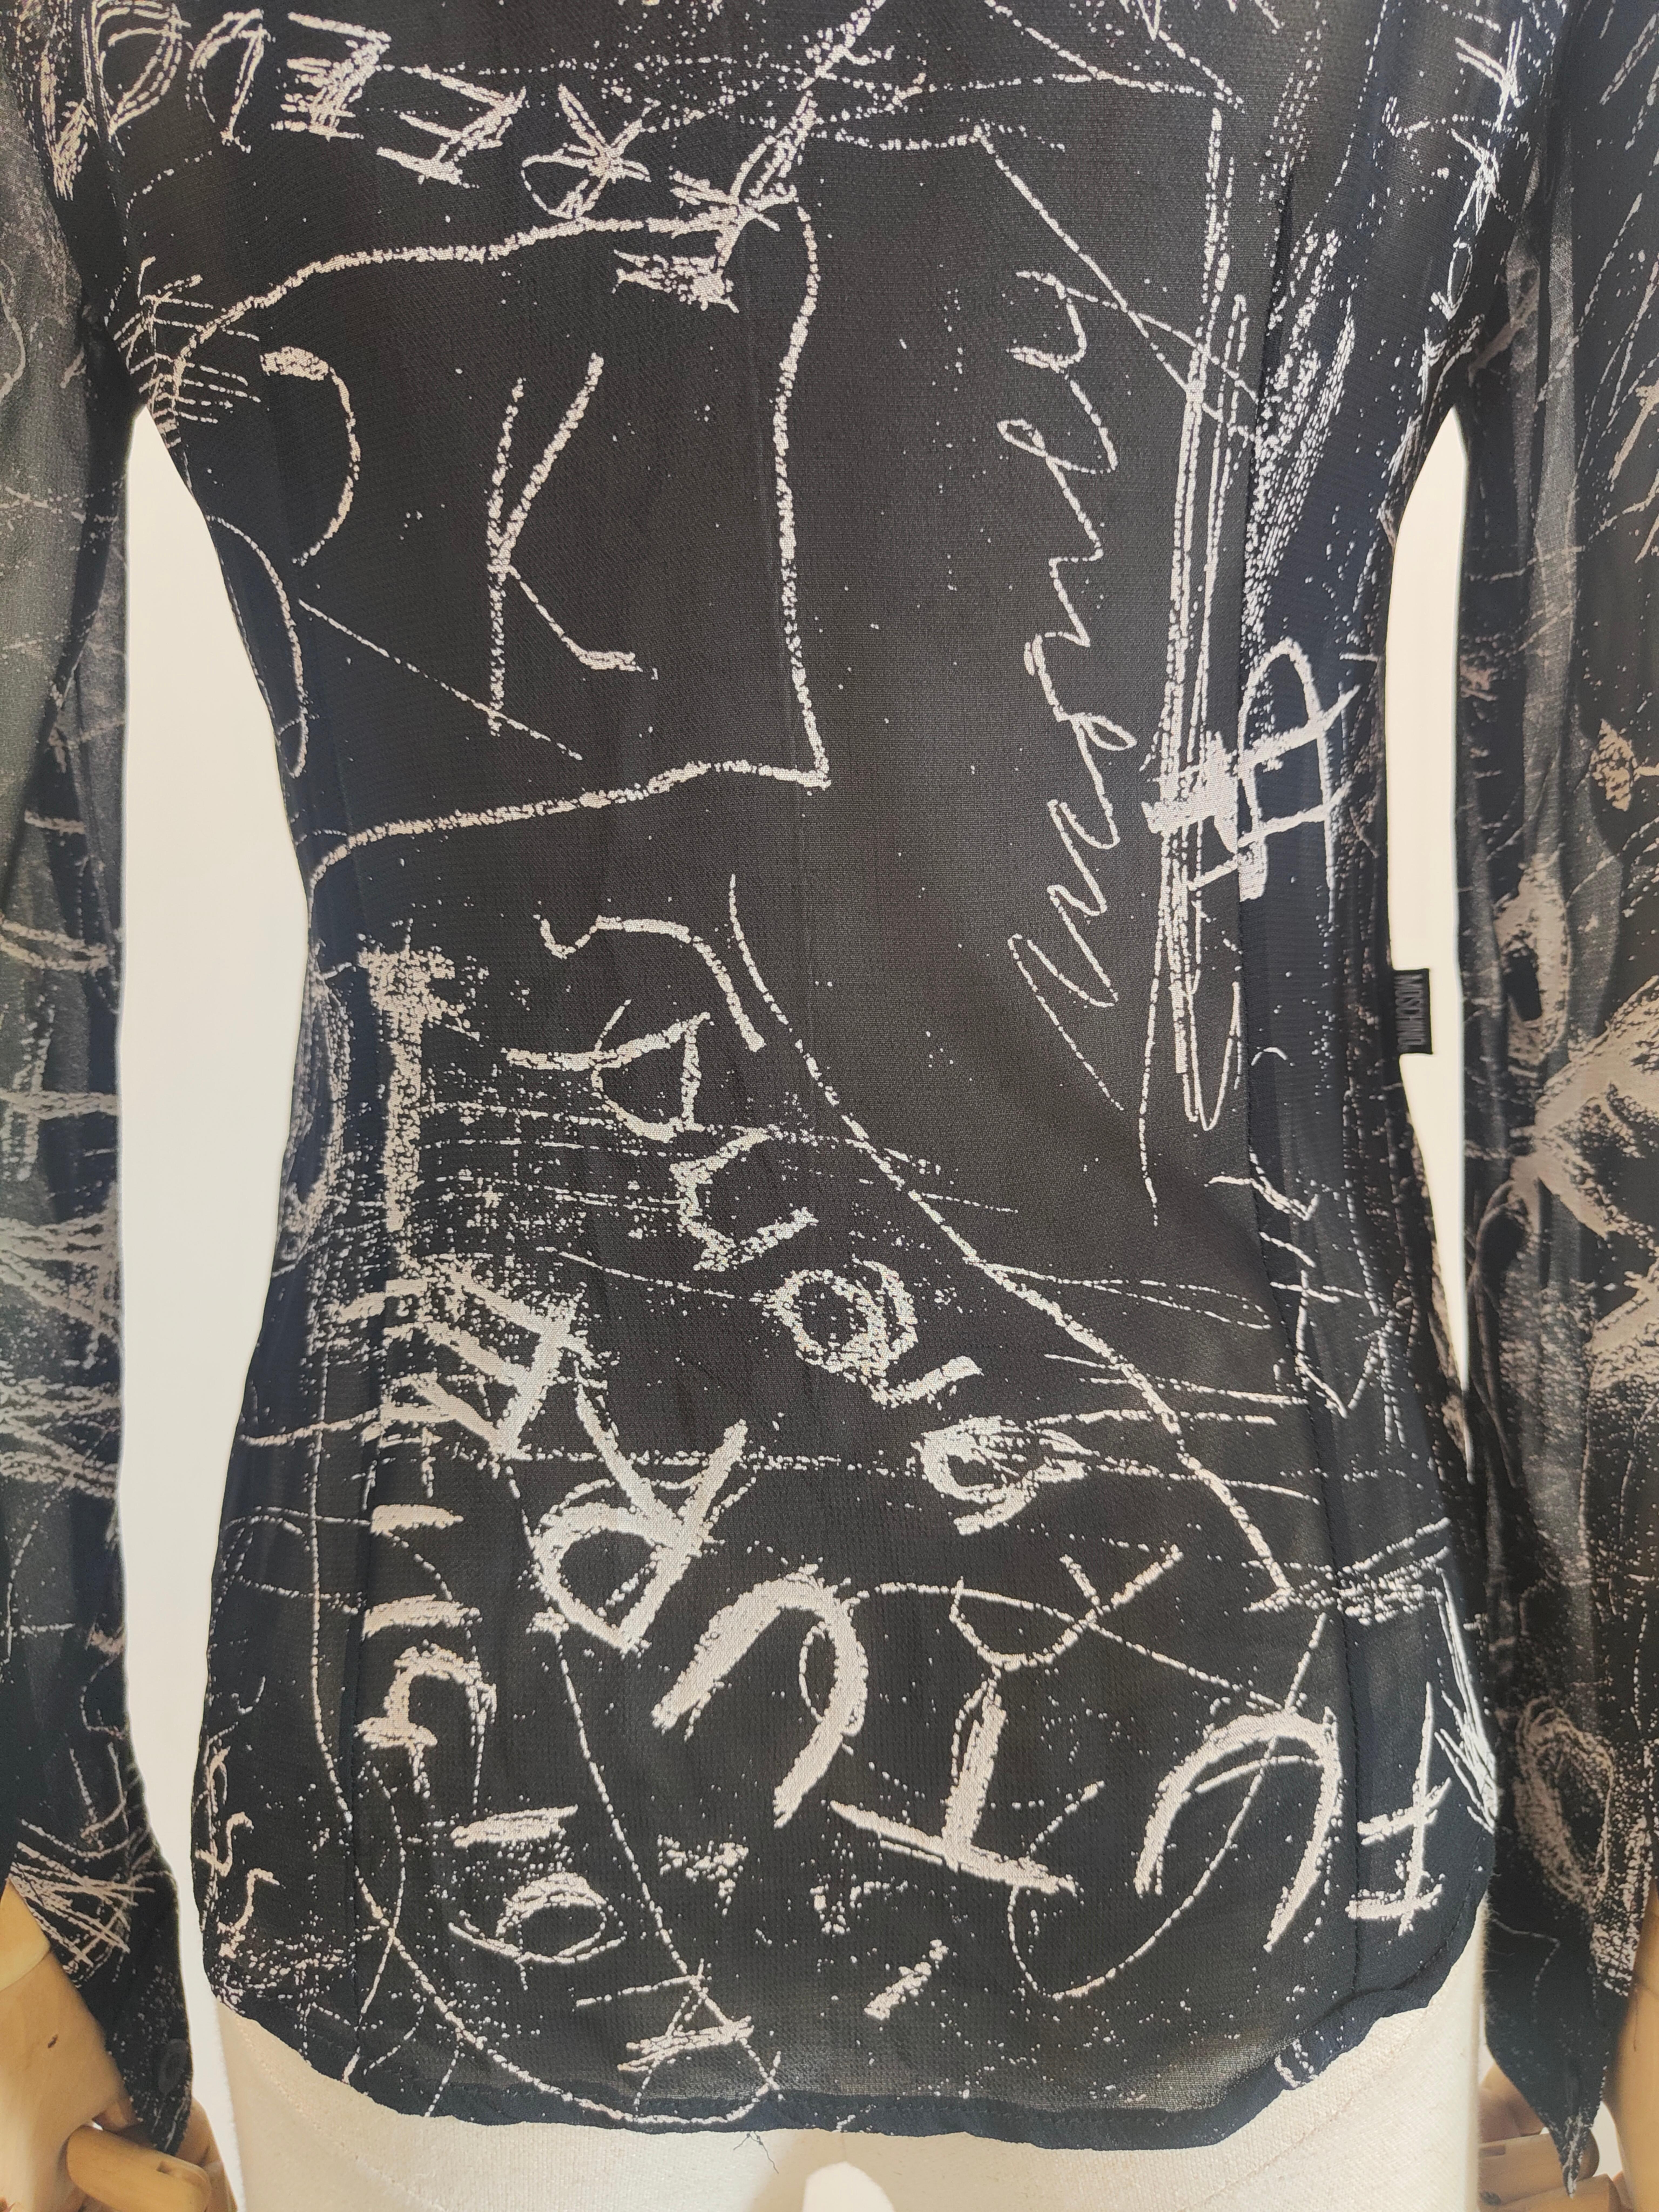 Moschino see through graffiti shirt For Sale 3